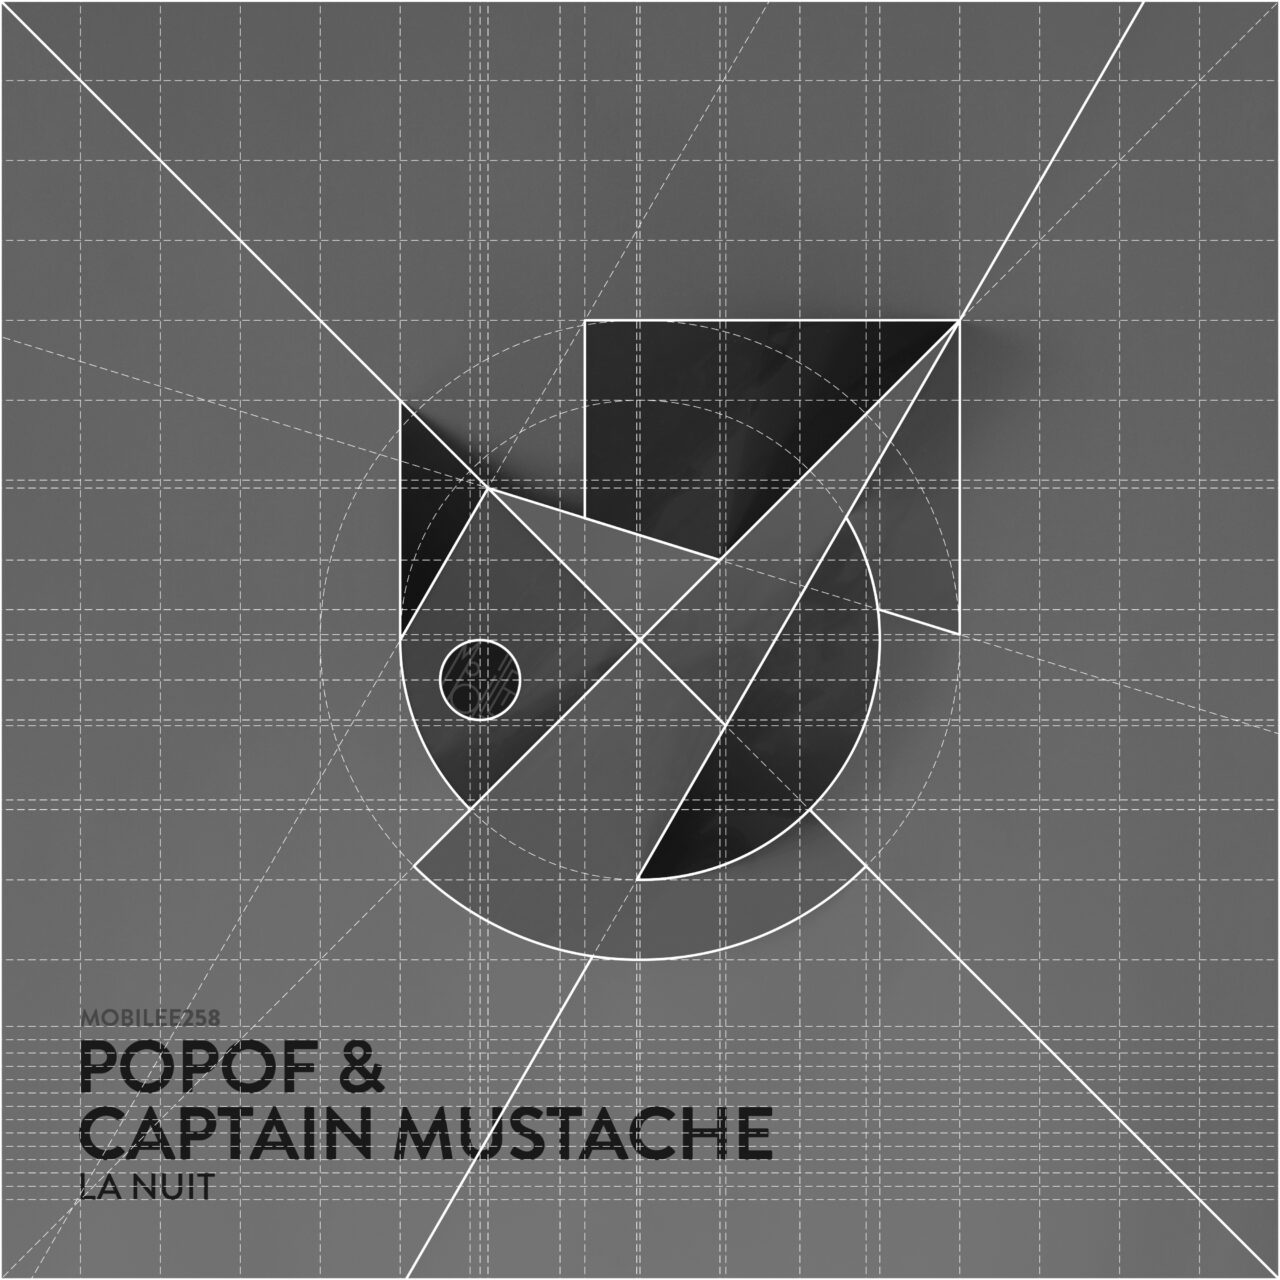 Mobilee258_Popof-CaptainMustache_LaNuit_construction_DEF